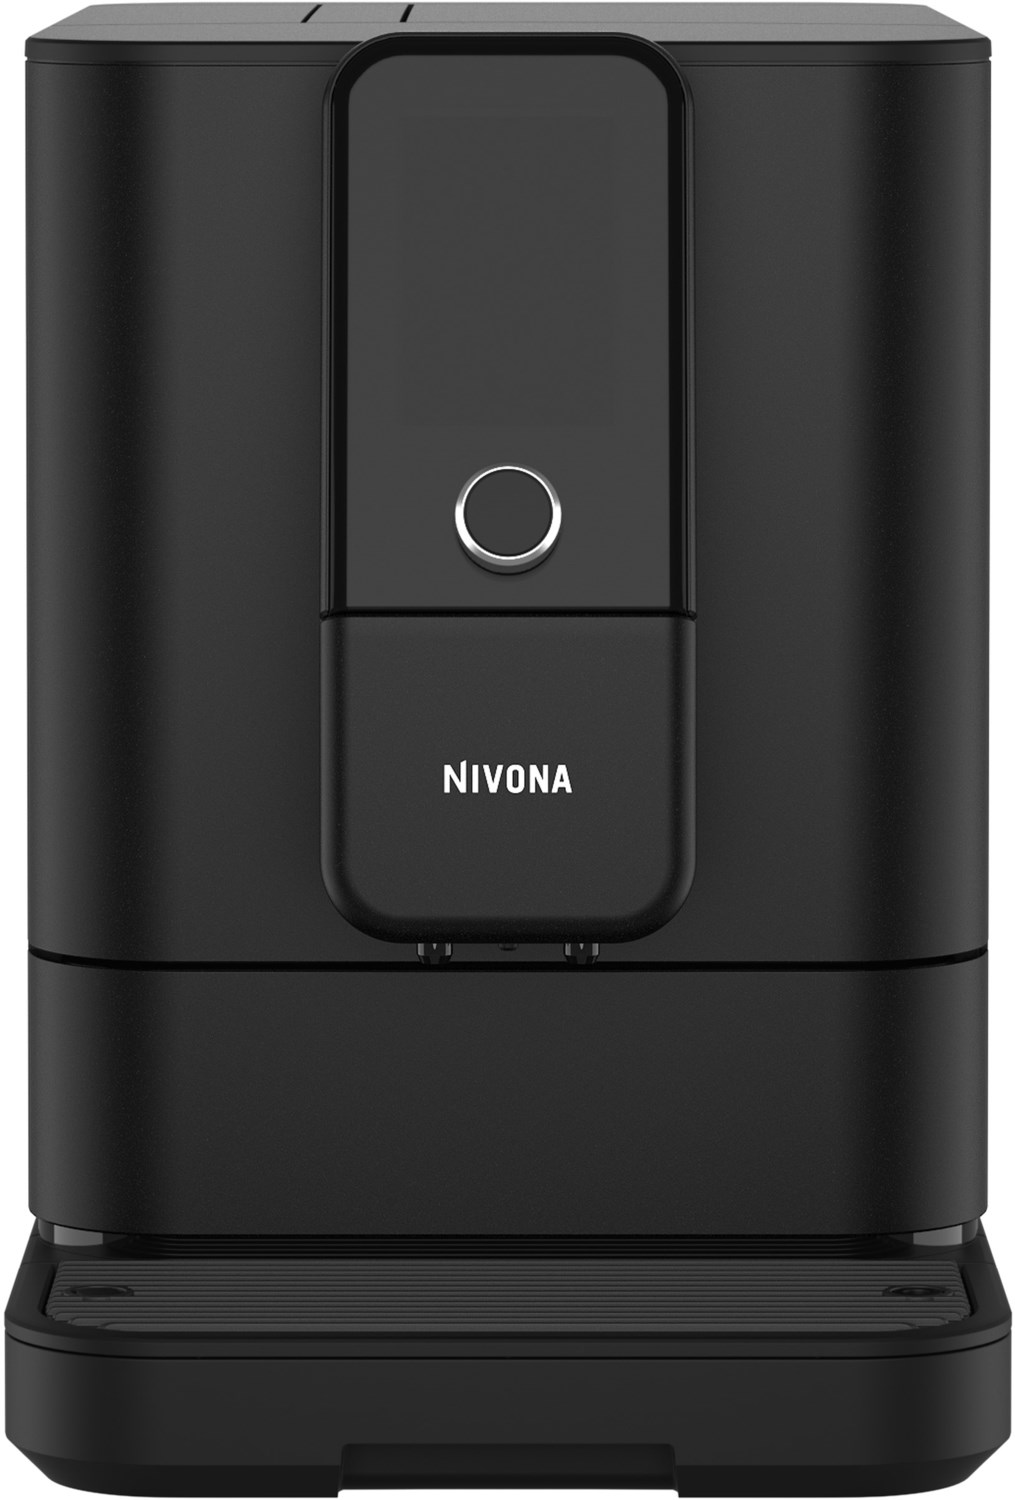 Nivona Kaffeevollautomat NIVO 8101 Schwarz // 1kg Nivona Kaffee gratis